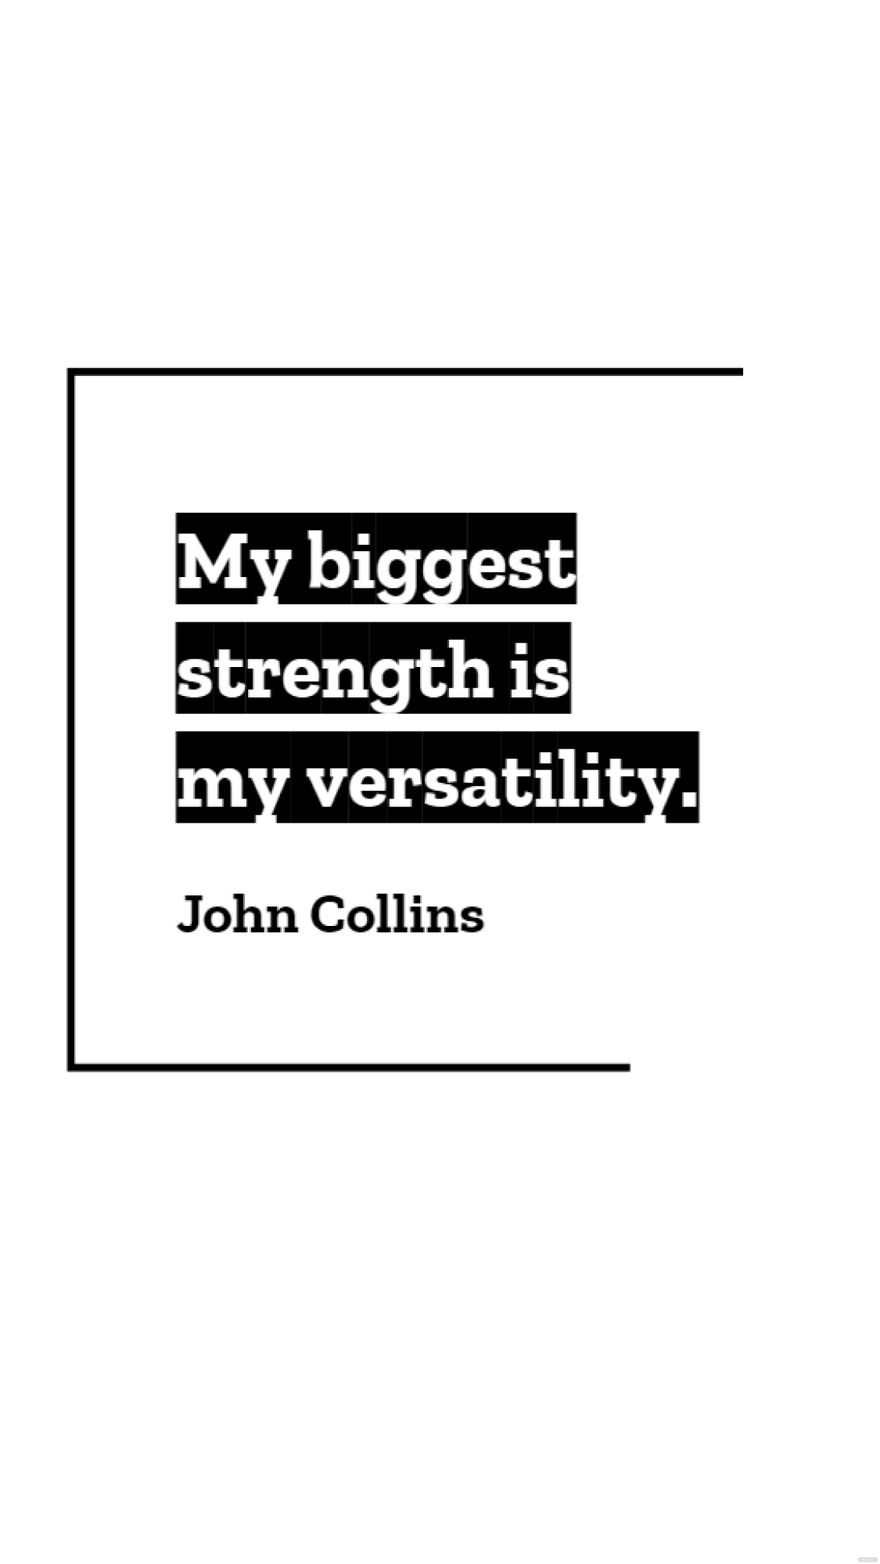 Free John Collins - My biggest strength is my versatility. in JPG